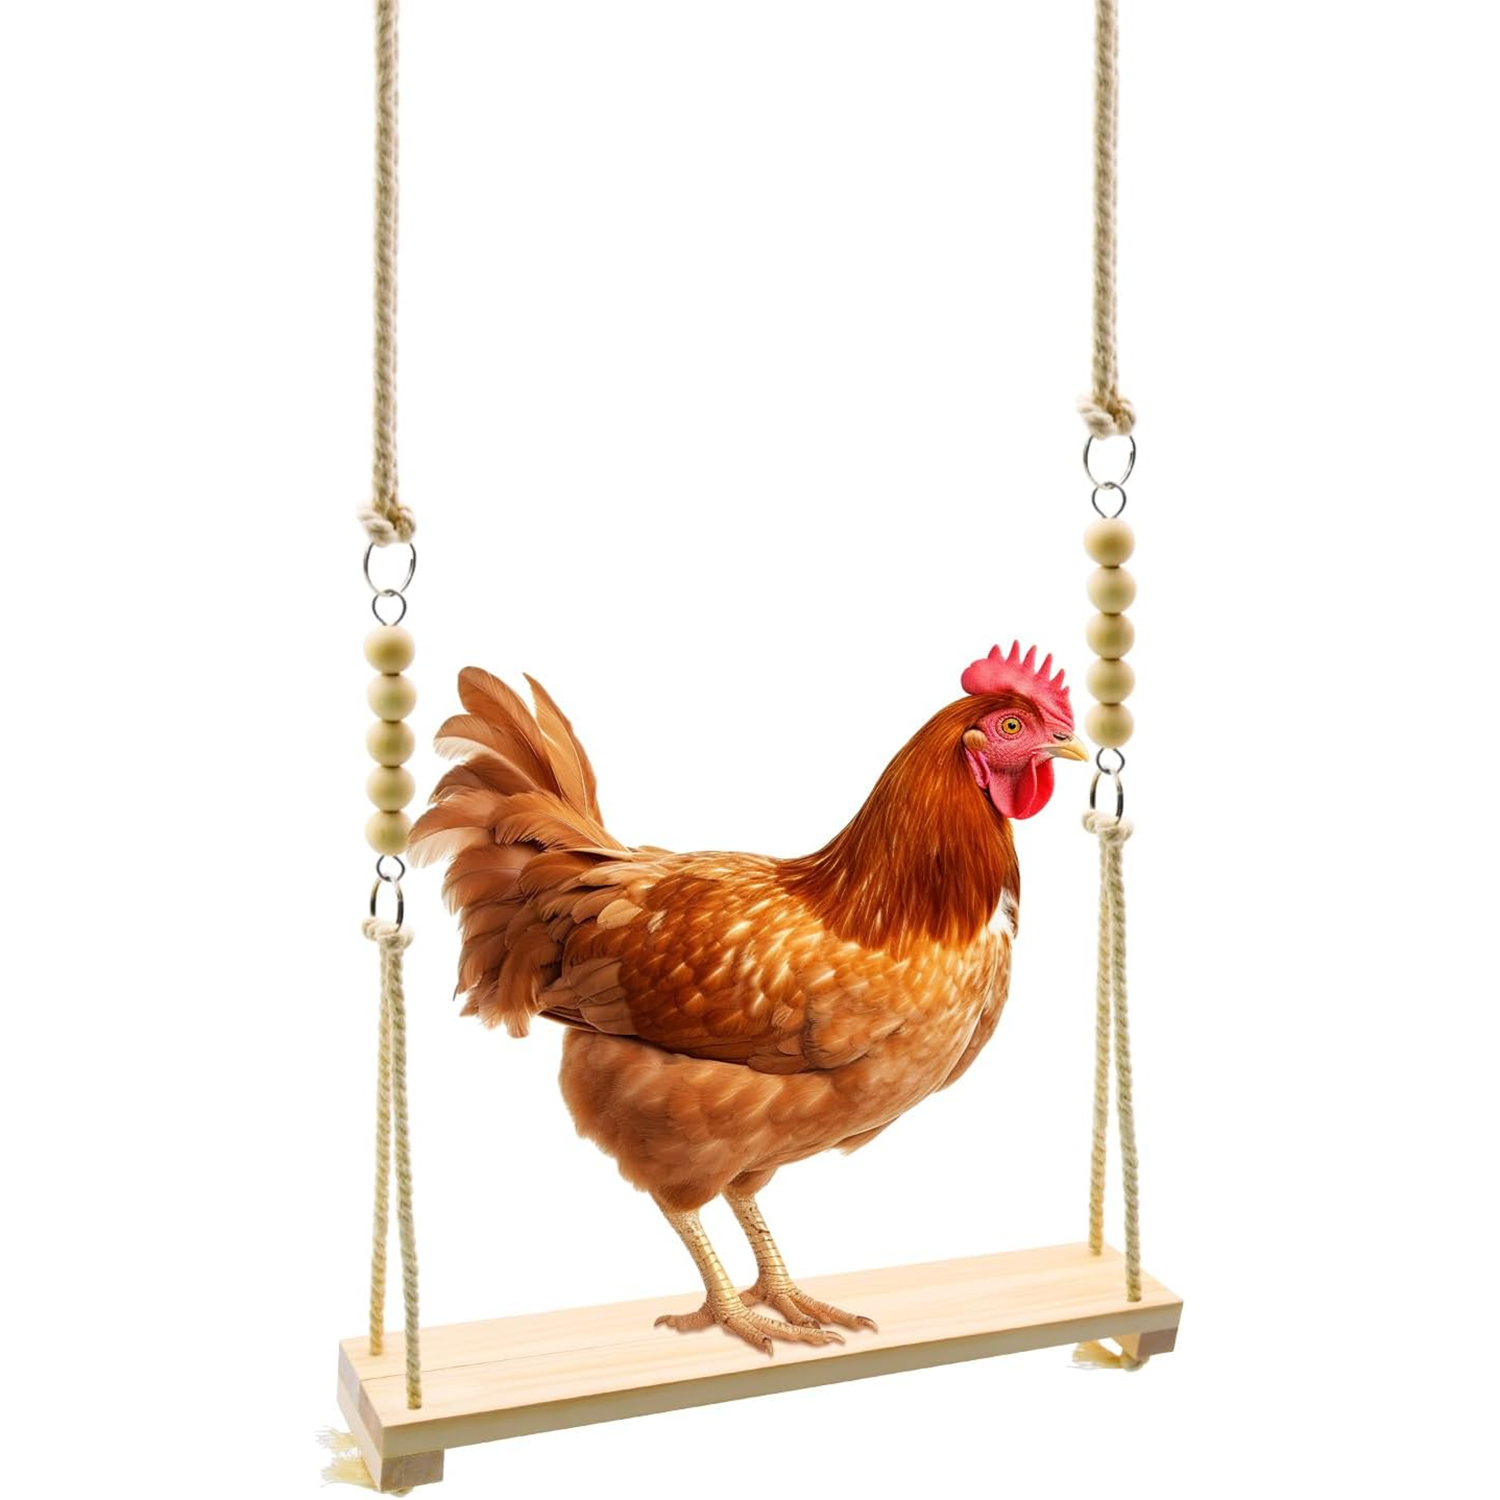 Chicken Swing Toy, Chicken Toy, Wood Chicken Swing Toy, Wood Chicken Swing for Chickens Rooster Poultry Parrots (1Pcs)